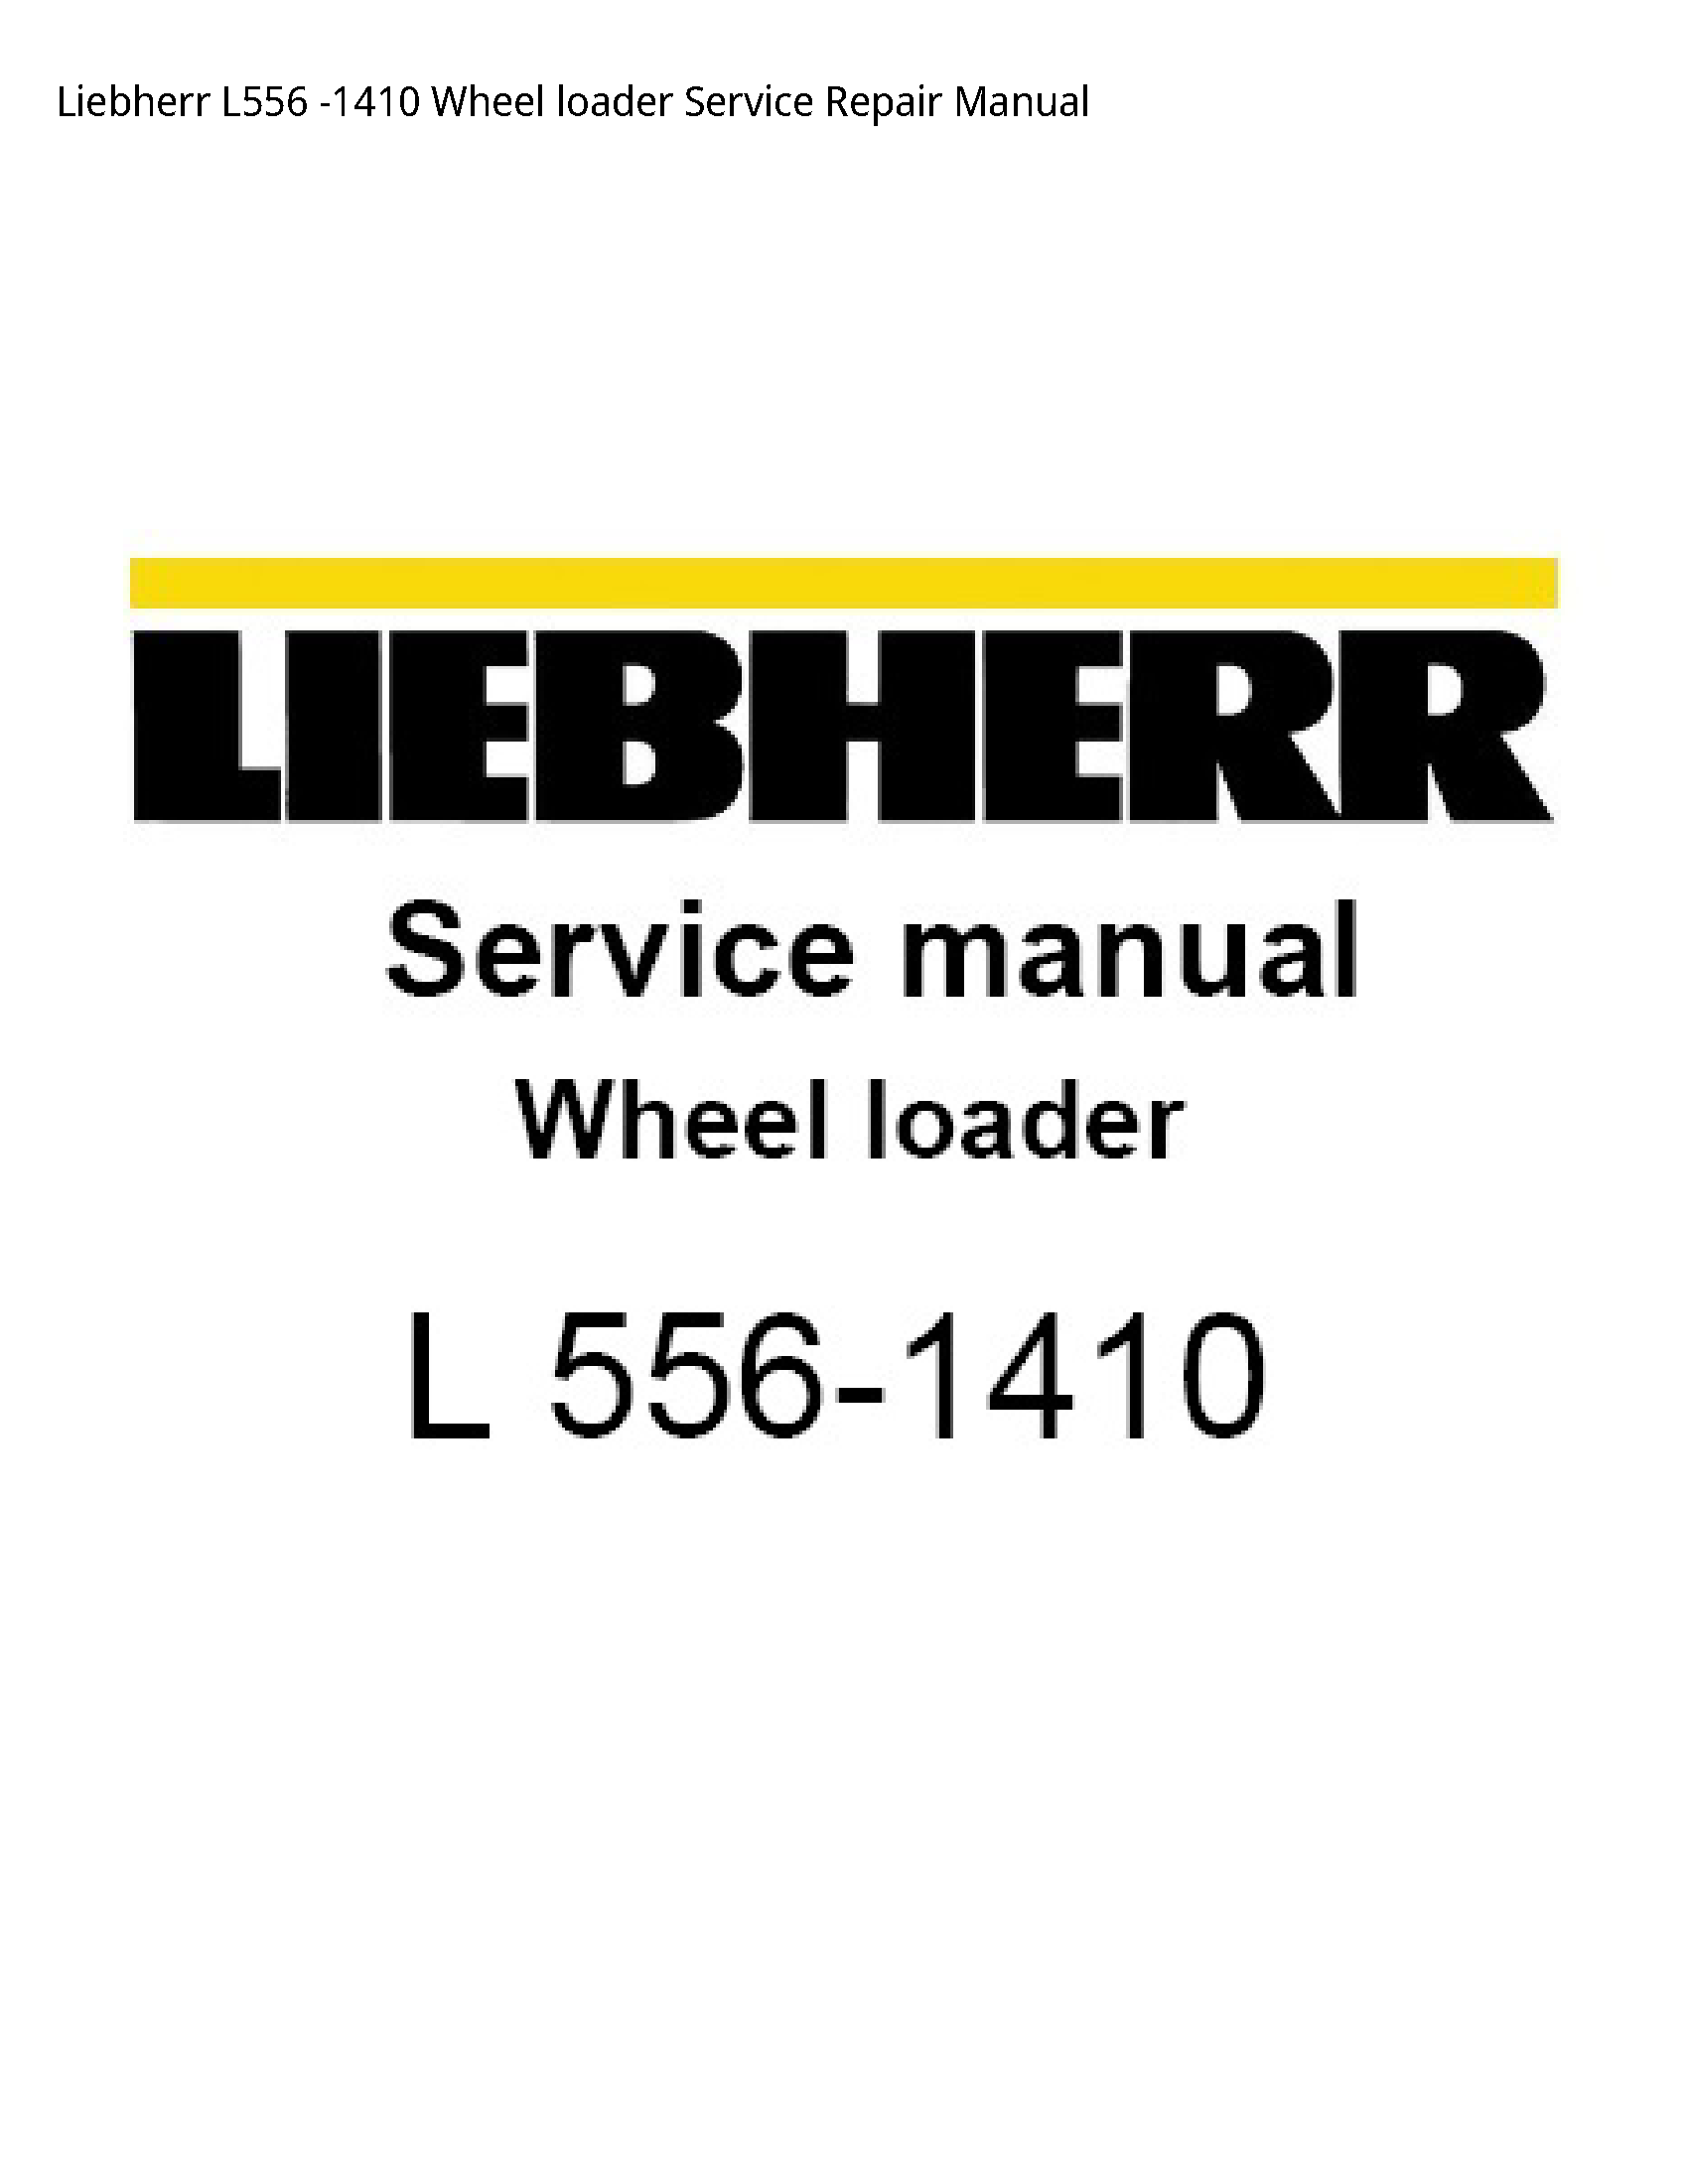 Liebherr L556 Wheel loader manual